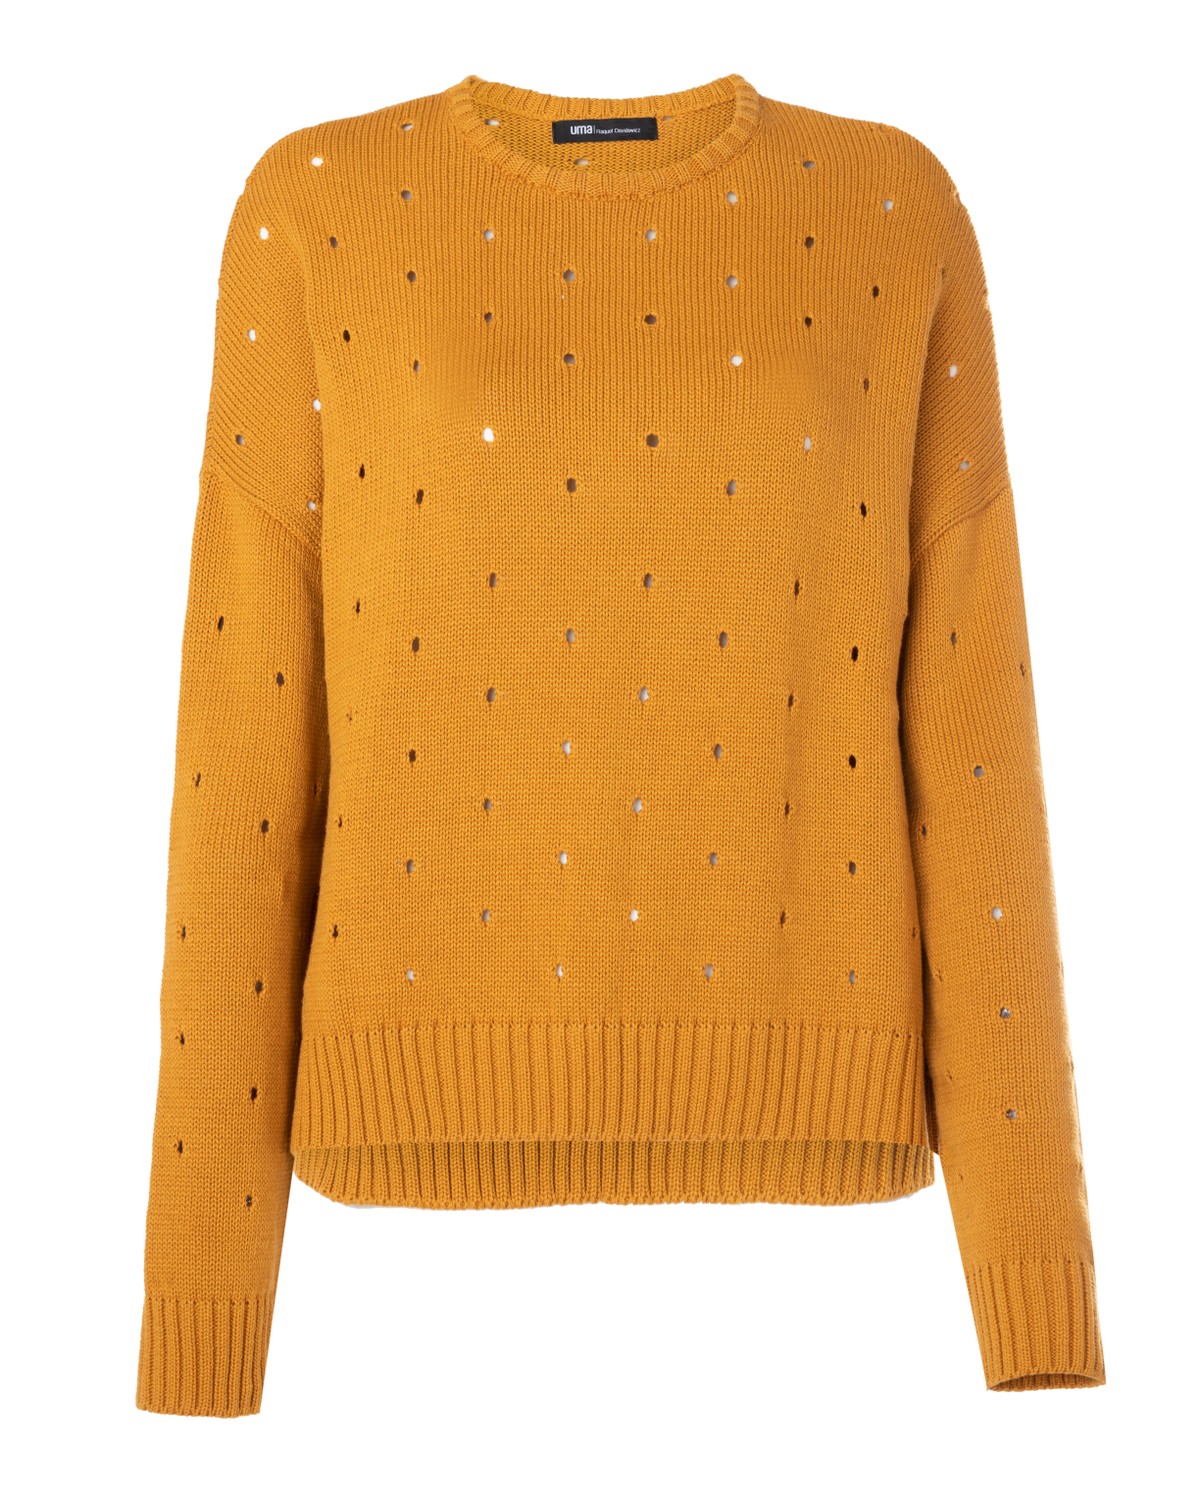 tricot manga longa com furos | knit sweater with holes